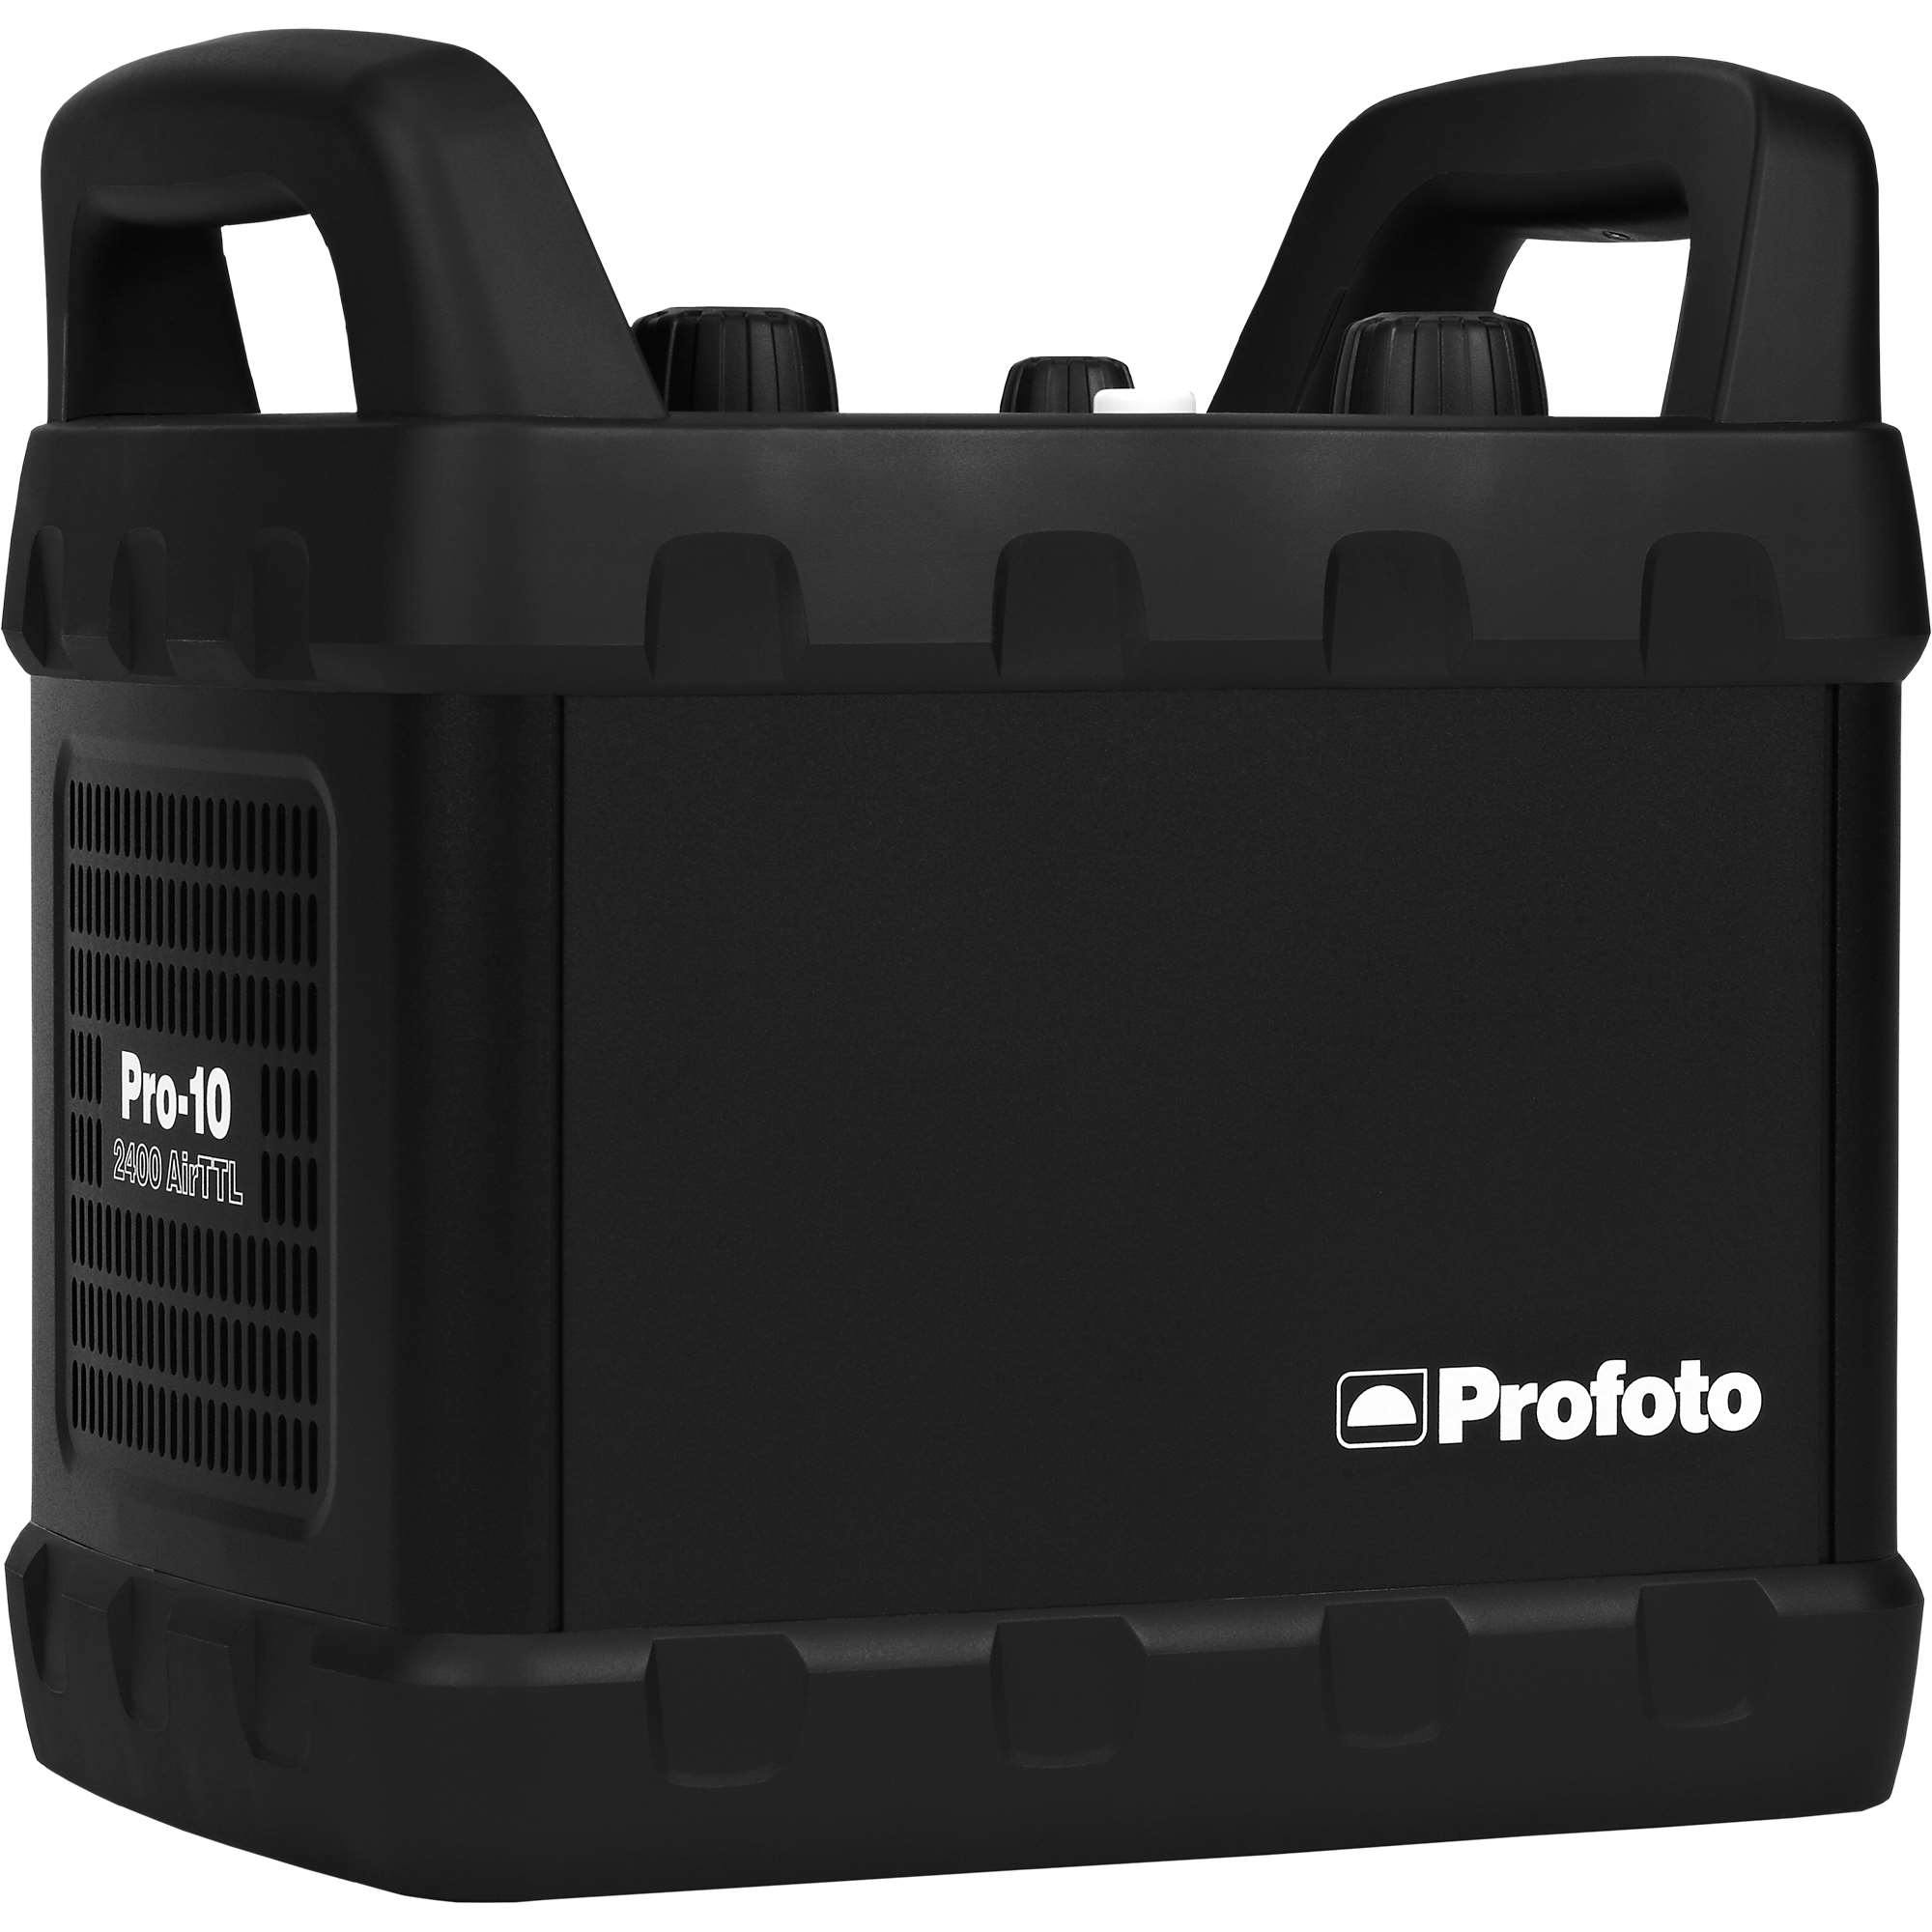 Profoto Pro-10 2400w Pack